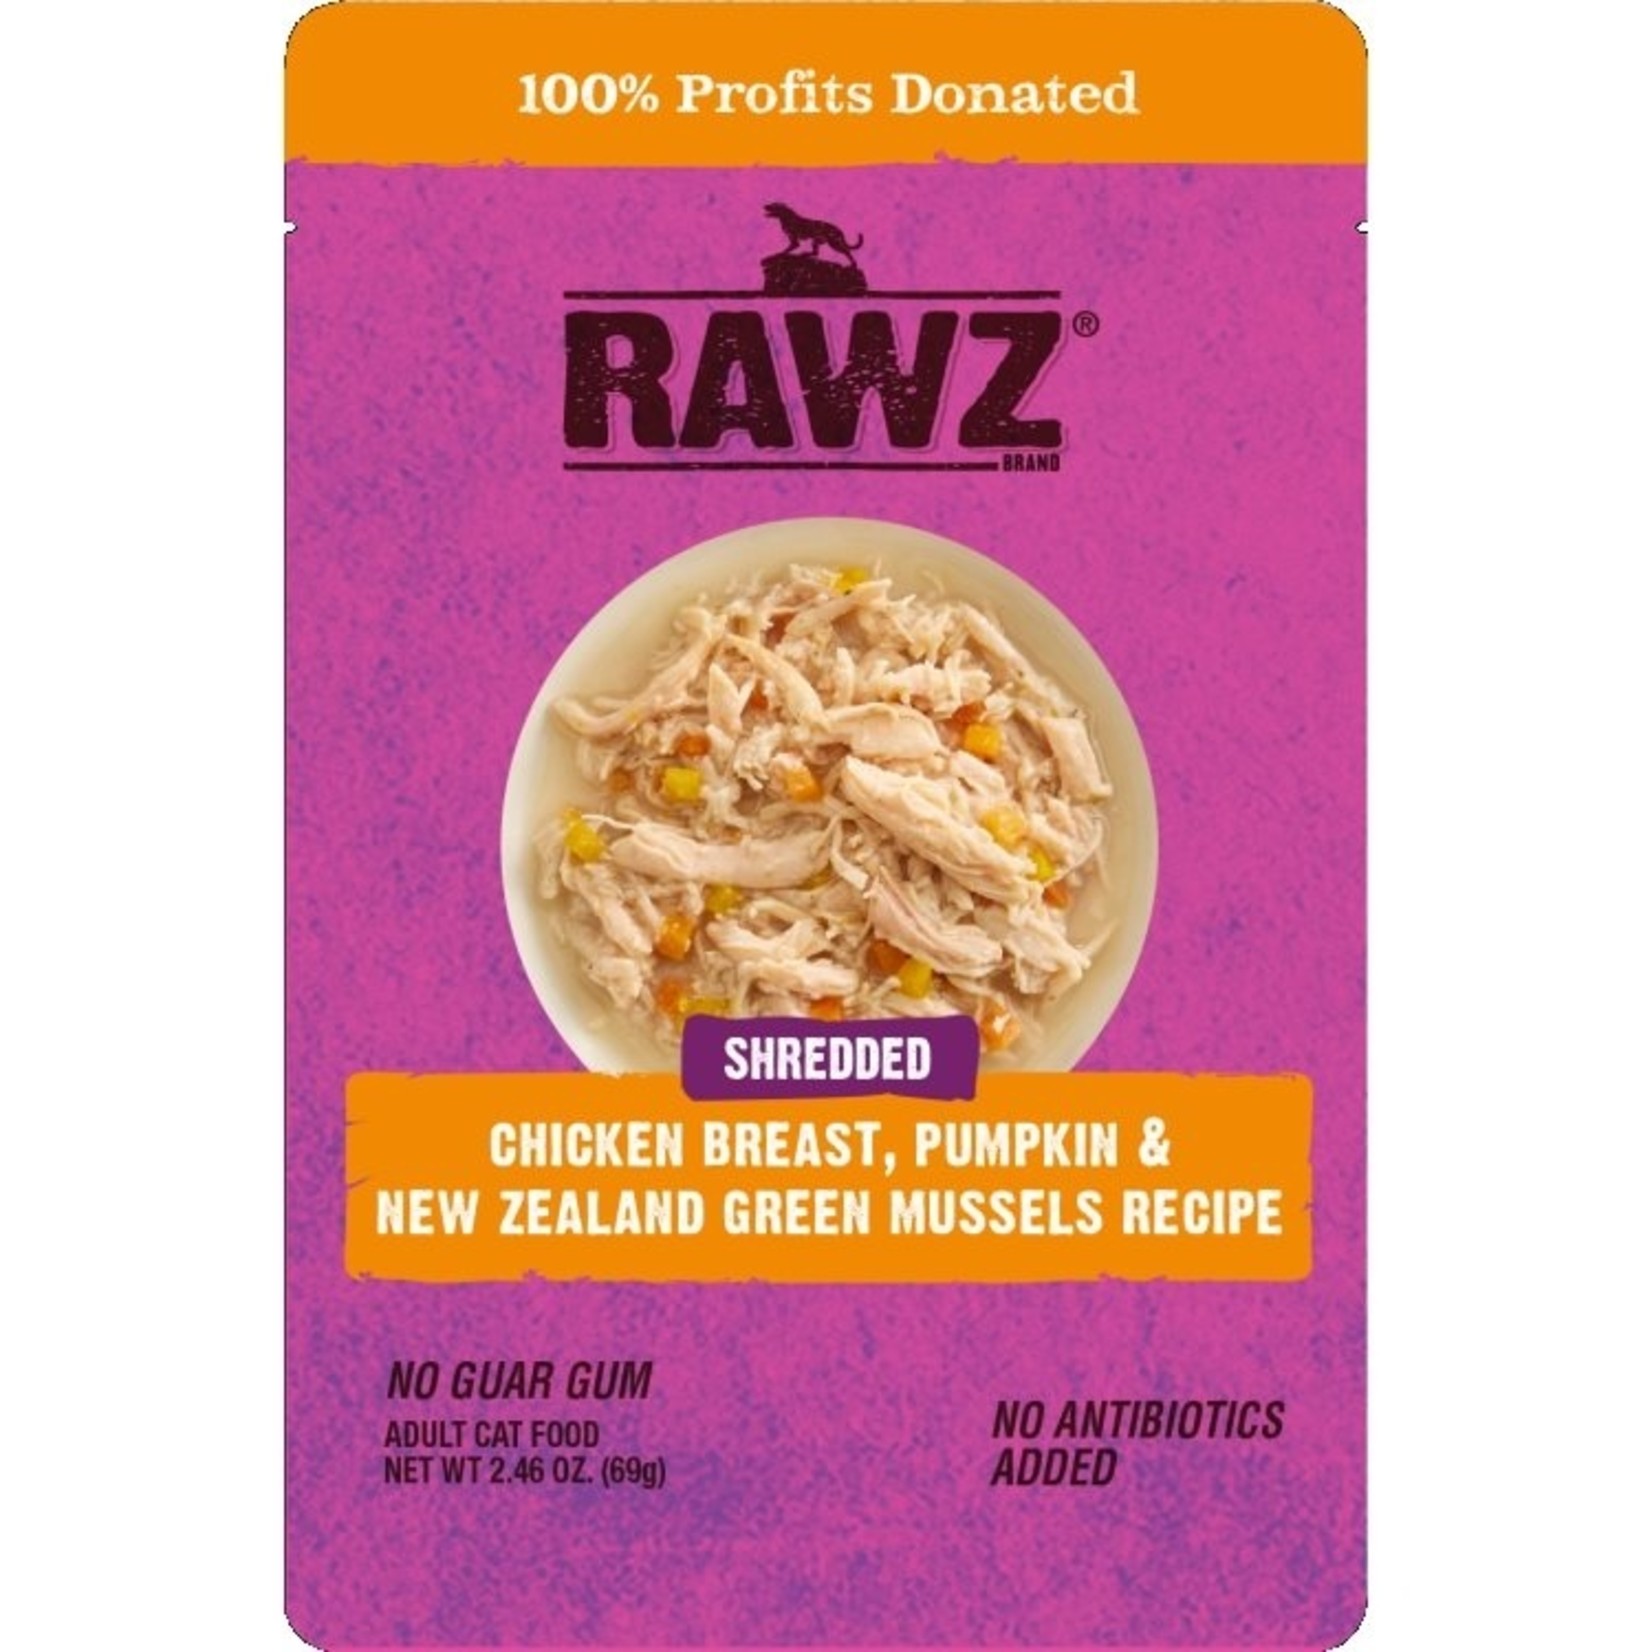 RAWZ Rawz Cat Shredded Chicken Breast, Pumpkin & New Zealand Green Mussels Recipe 69g Pouch